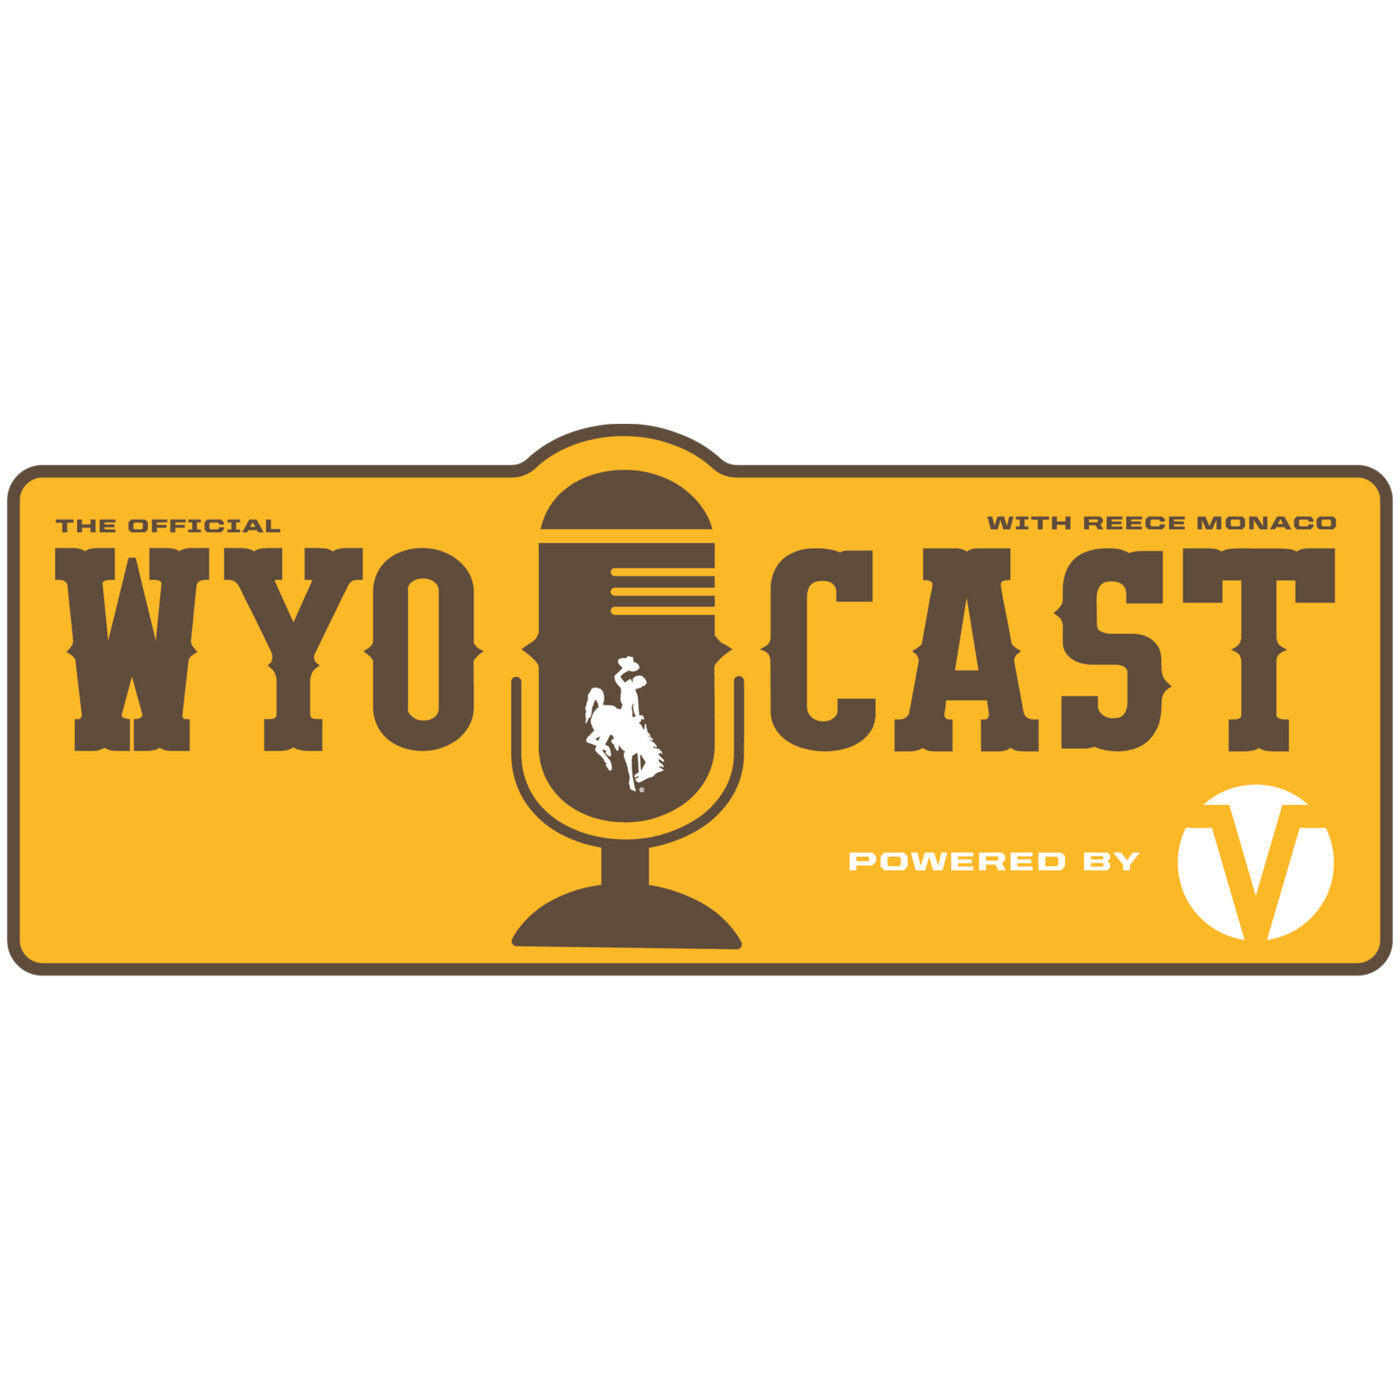 The WyoCast